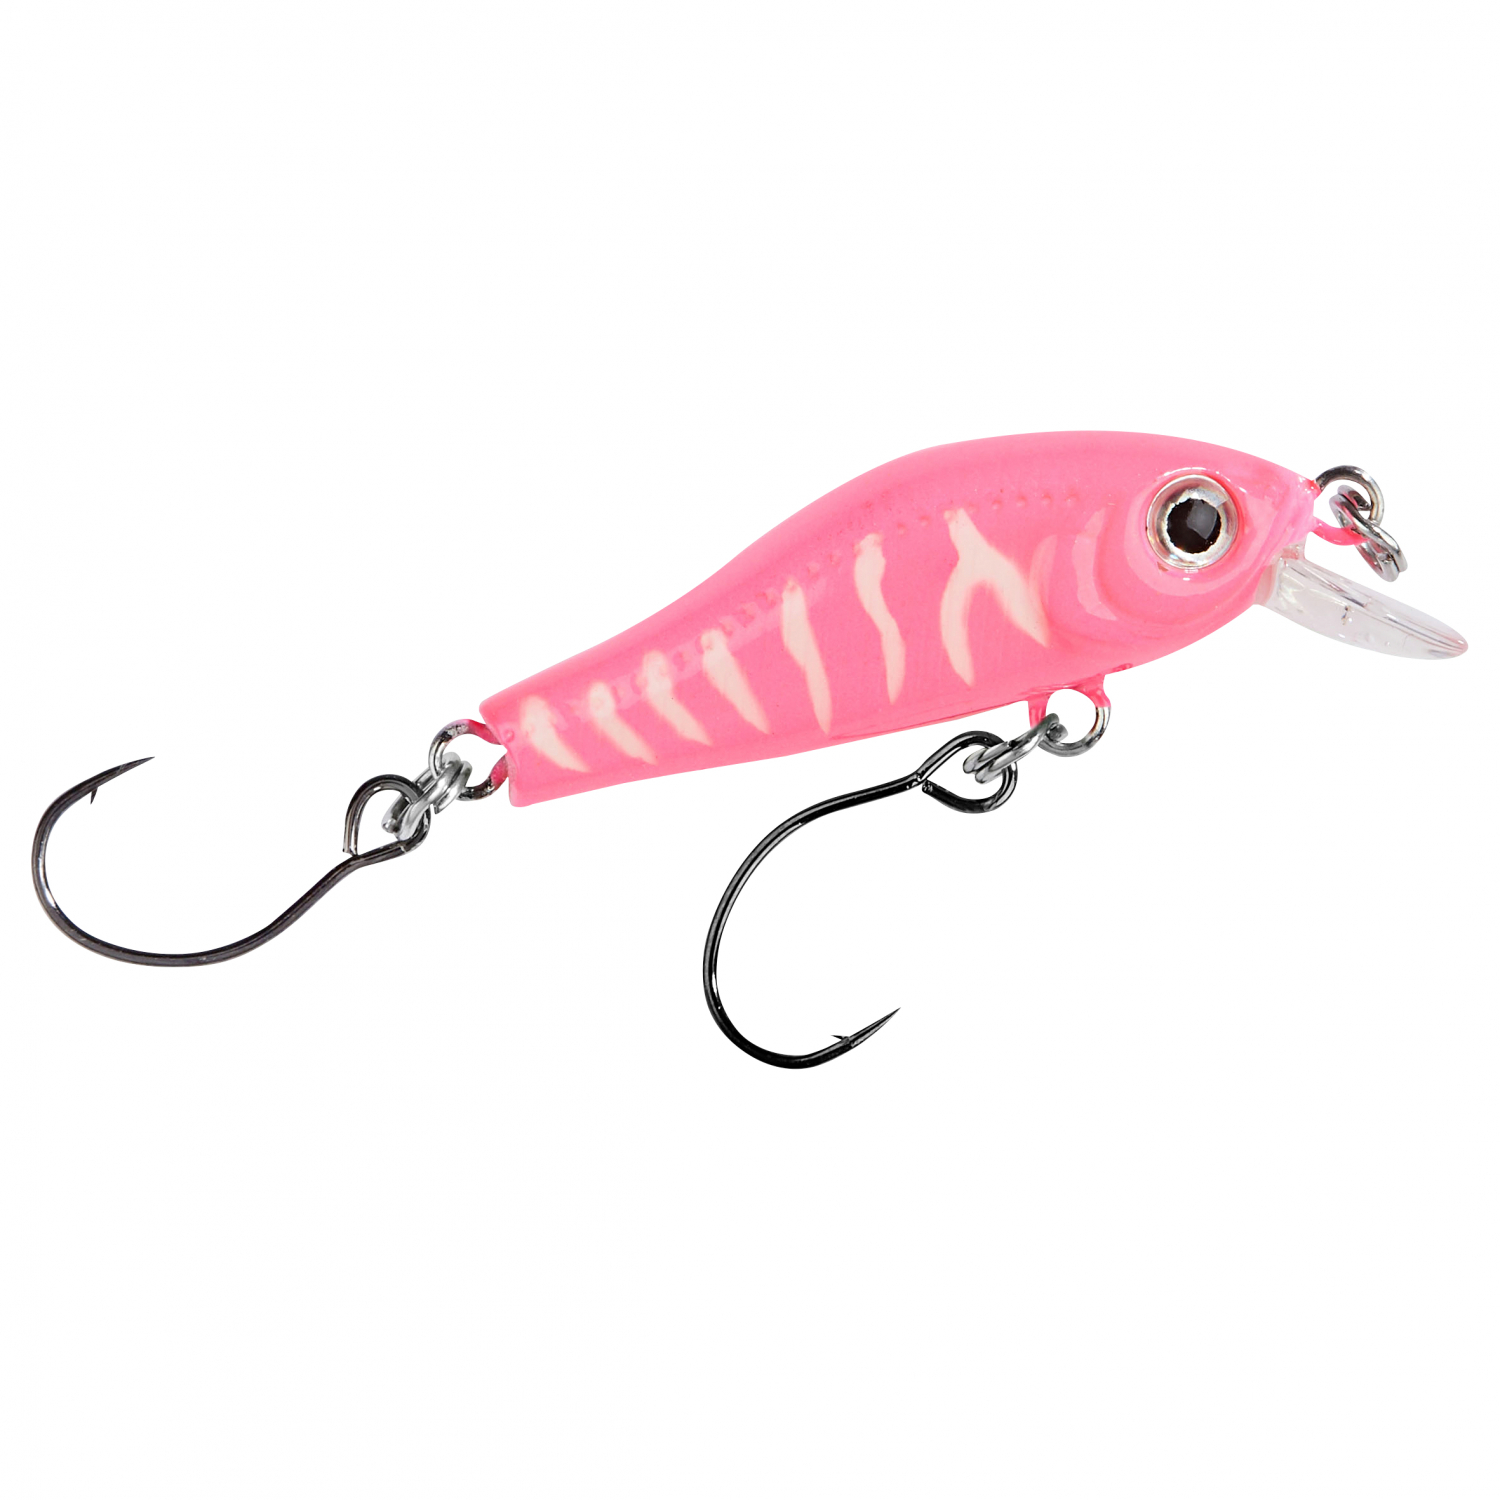 Balzer Balzer Minnow wobbler with single hook - Pink 